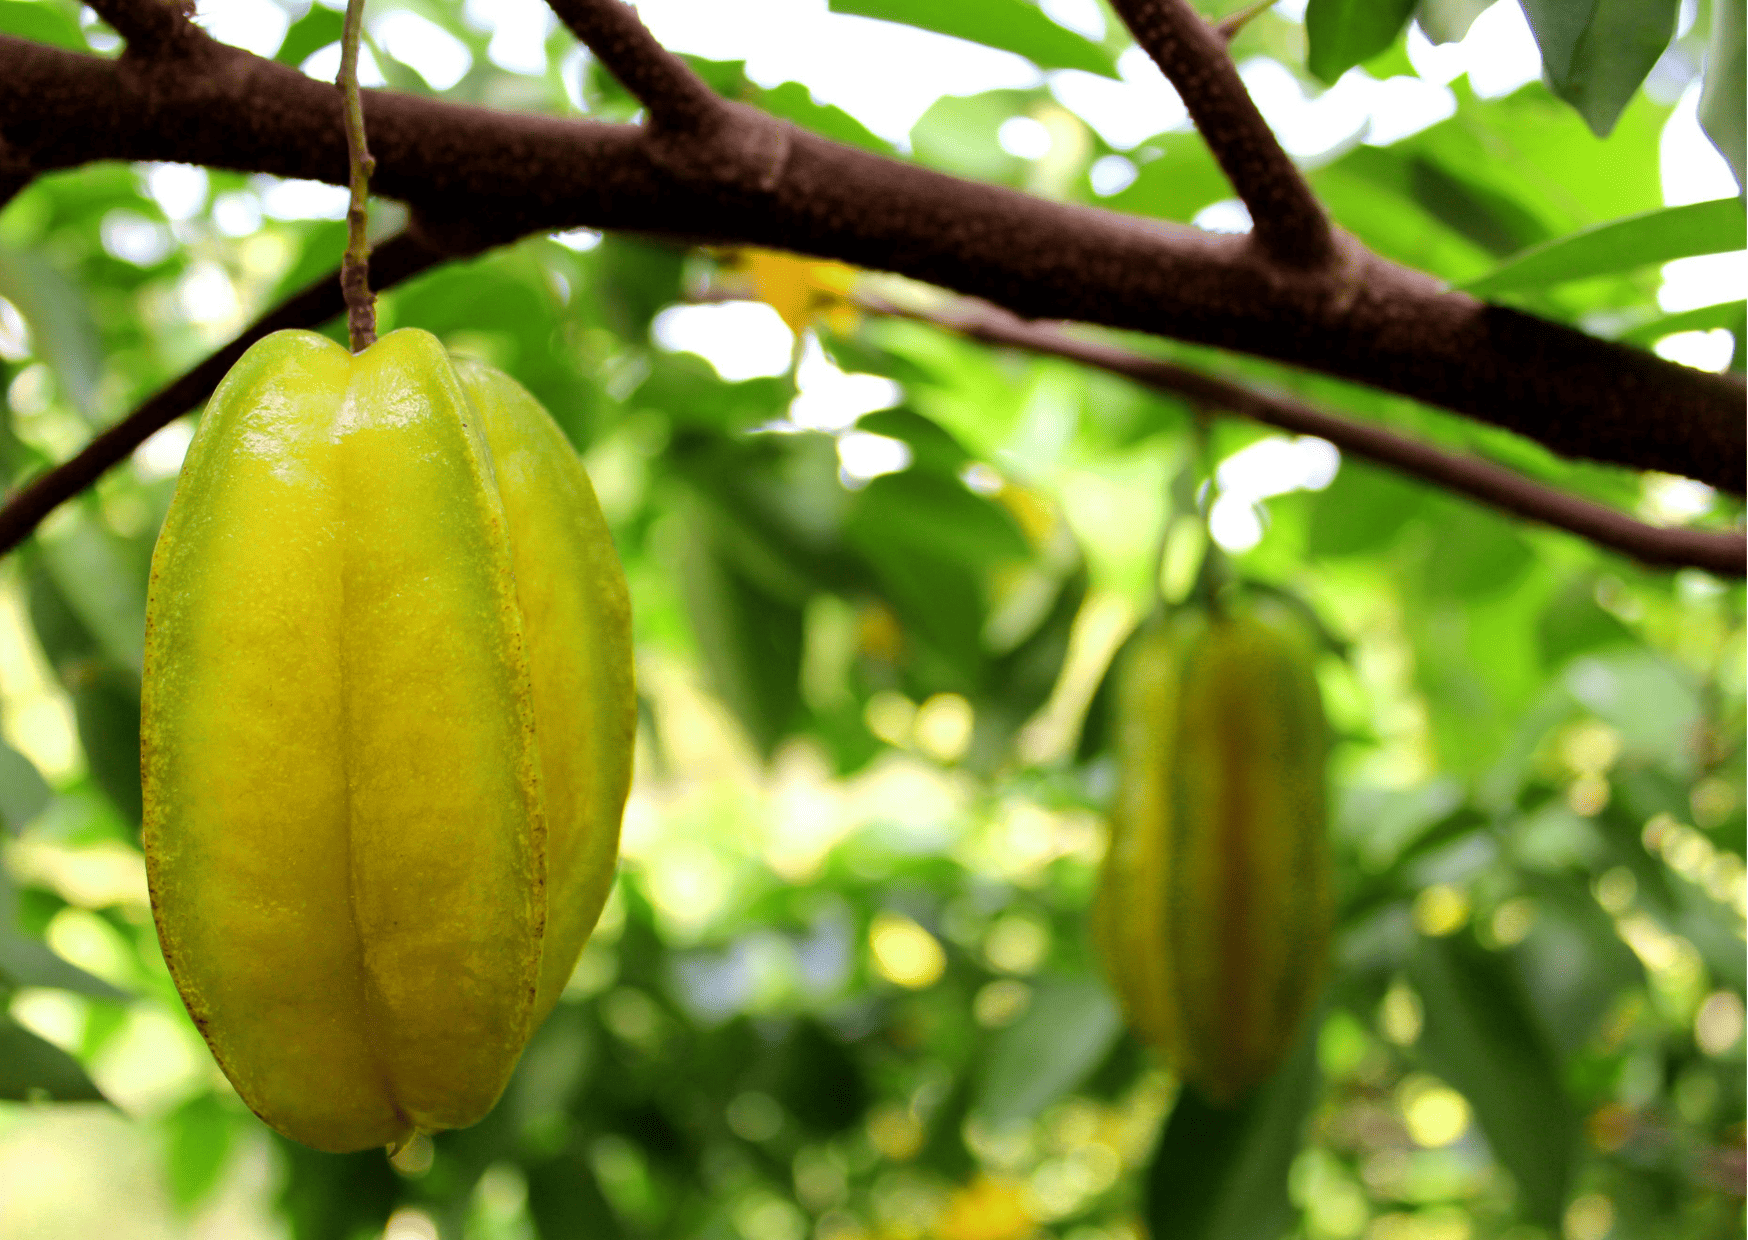 Exotic El Salvador Fruits - 30 Fruits in El Salvador to Try